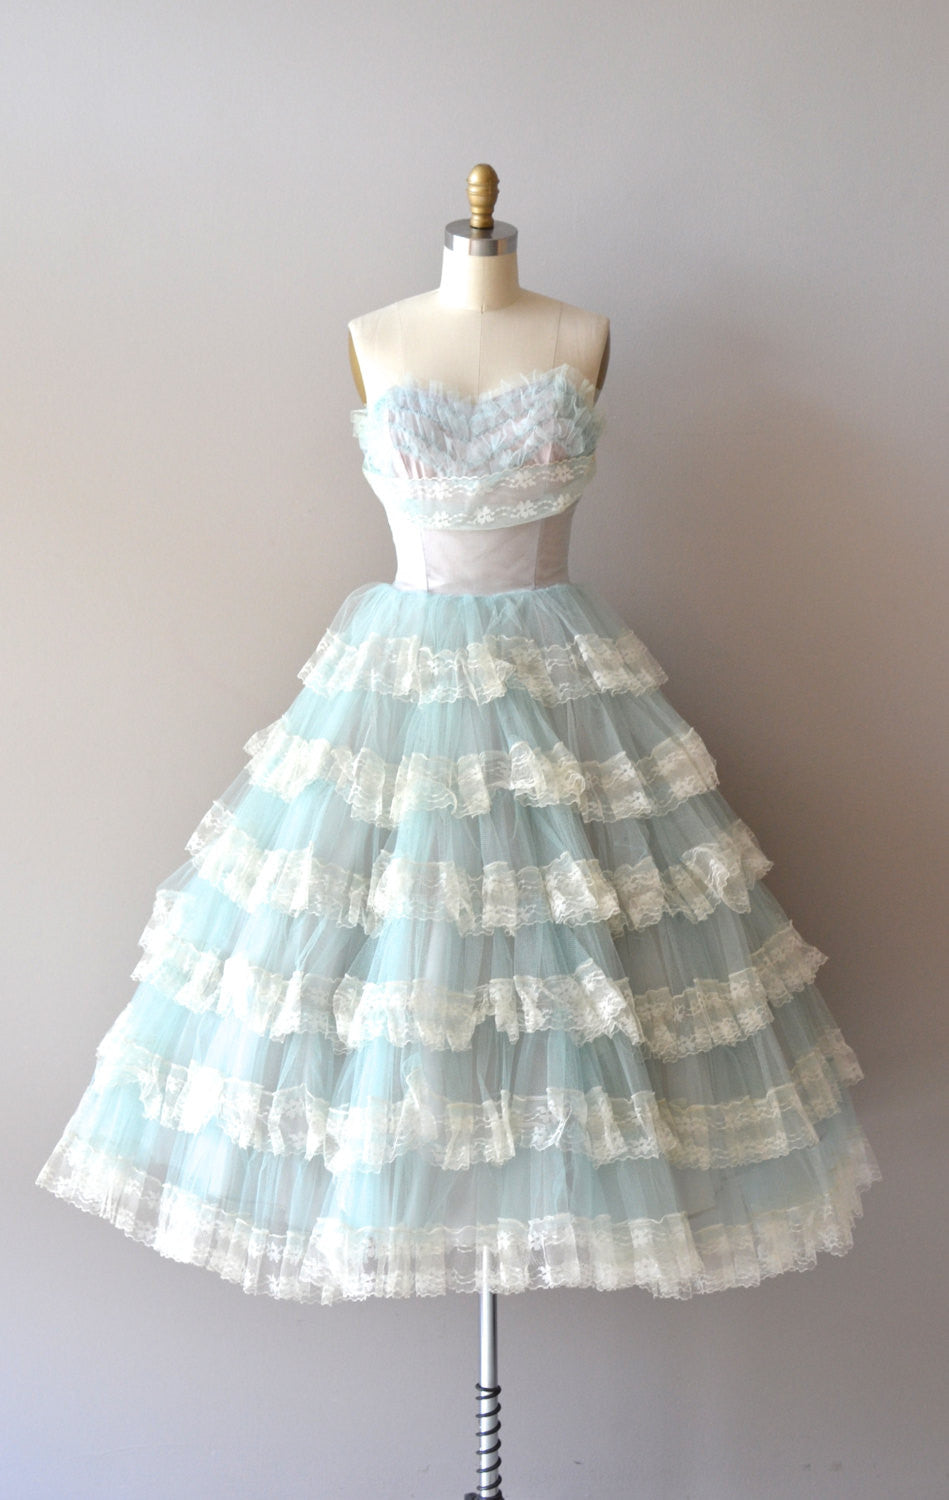 50s prom dress